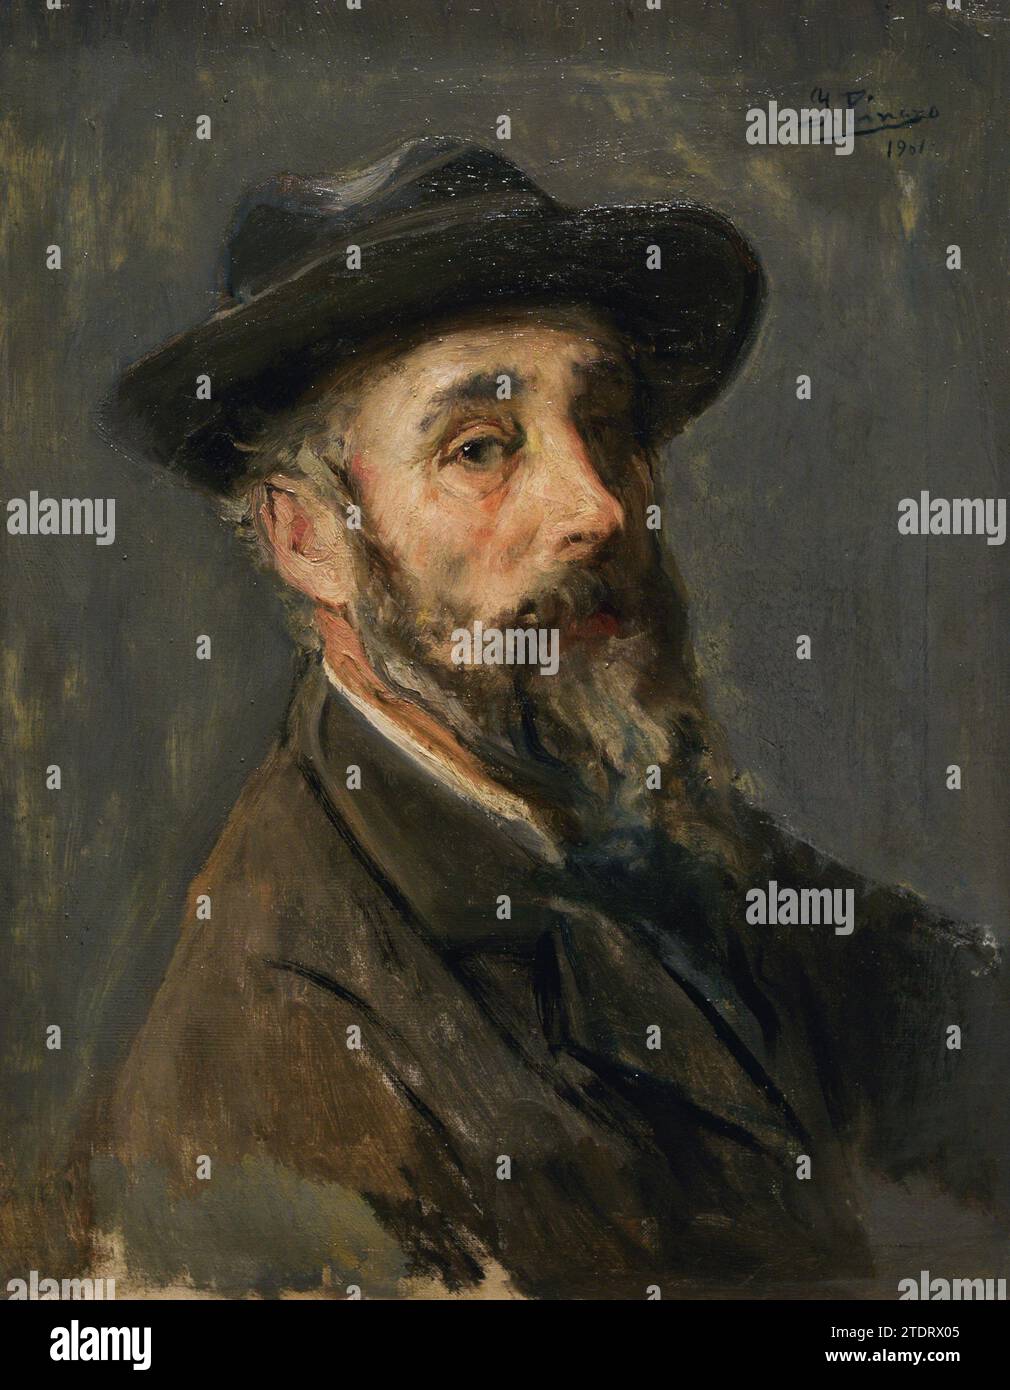 Ignacio Pinazo Camarlench (1849-1916). Spanish painter. Self-portrait with a Hat, 1901. Oil on canvas, 57 x 45 cm. Prado Museum. Madrid. Spain. Stock Photo